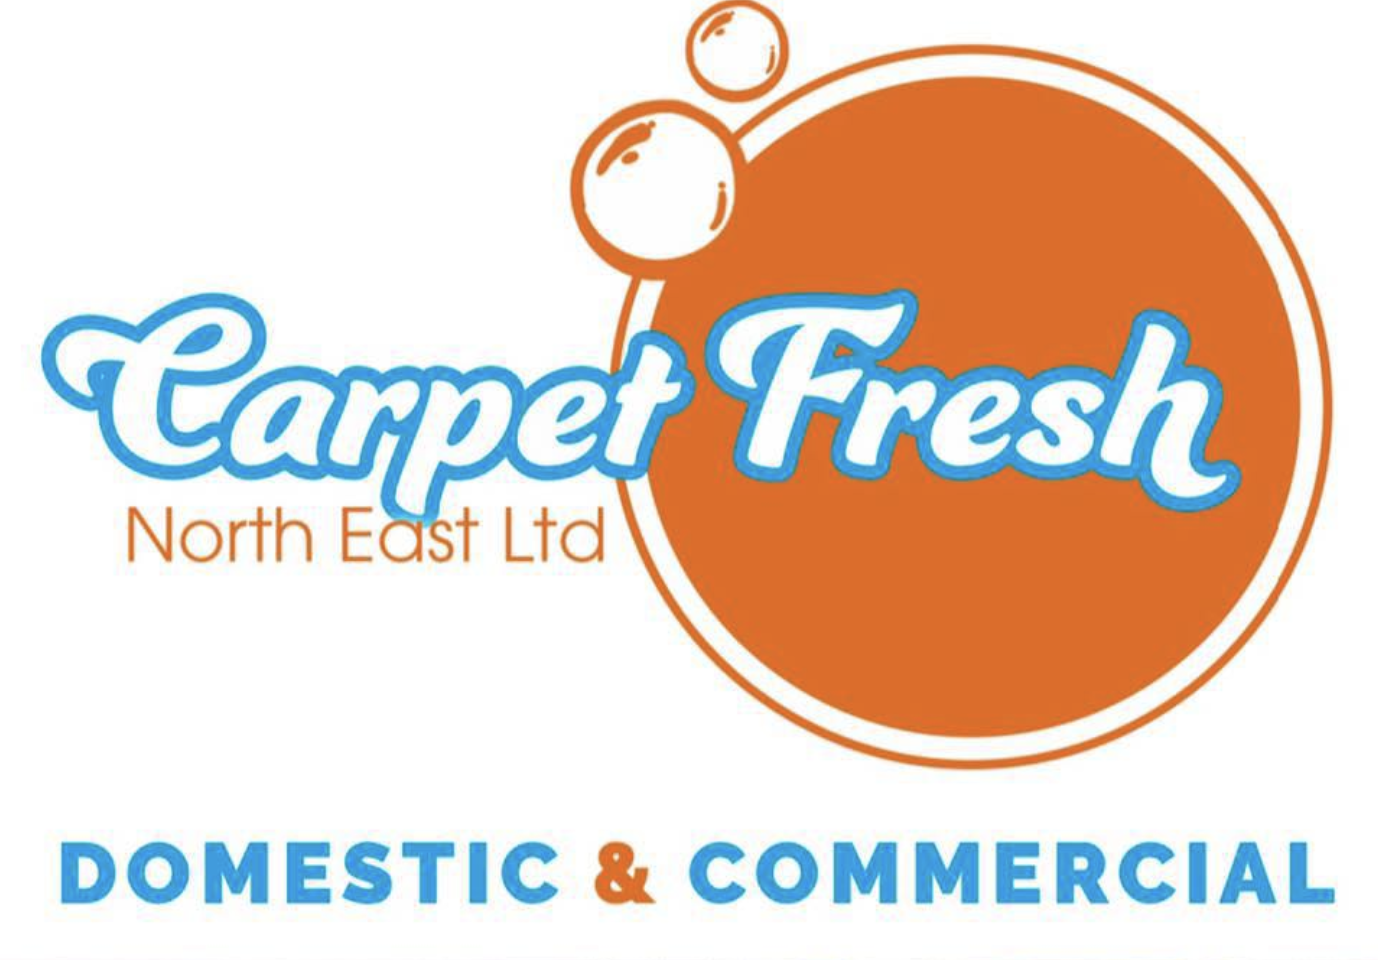 Carpet Fresh North East logo